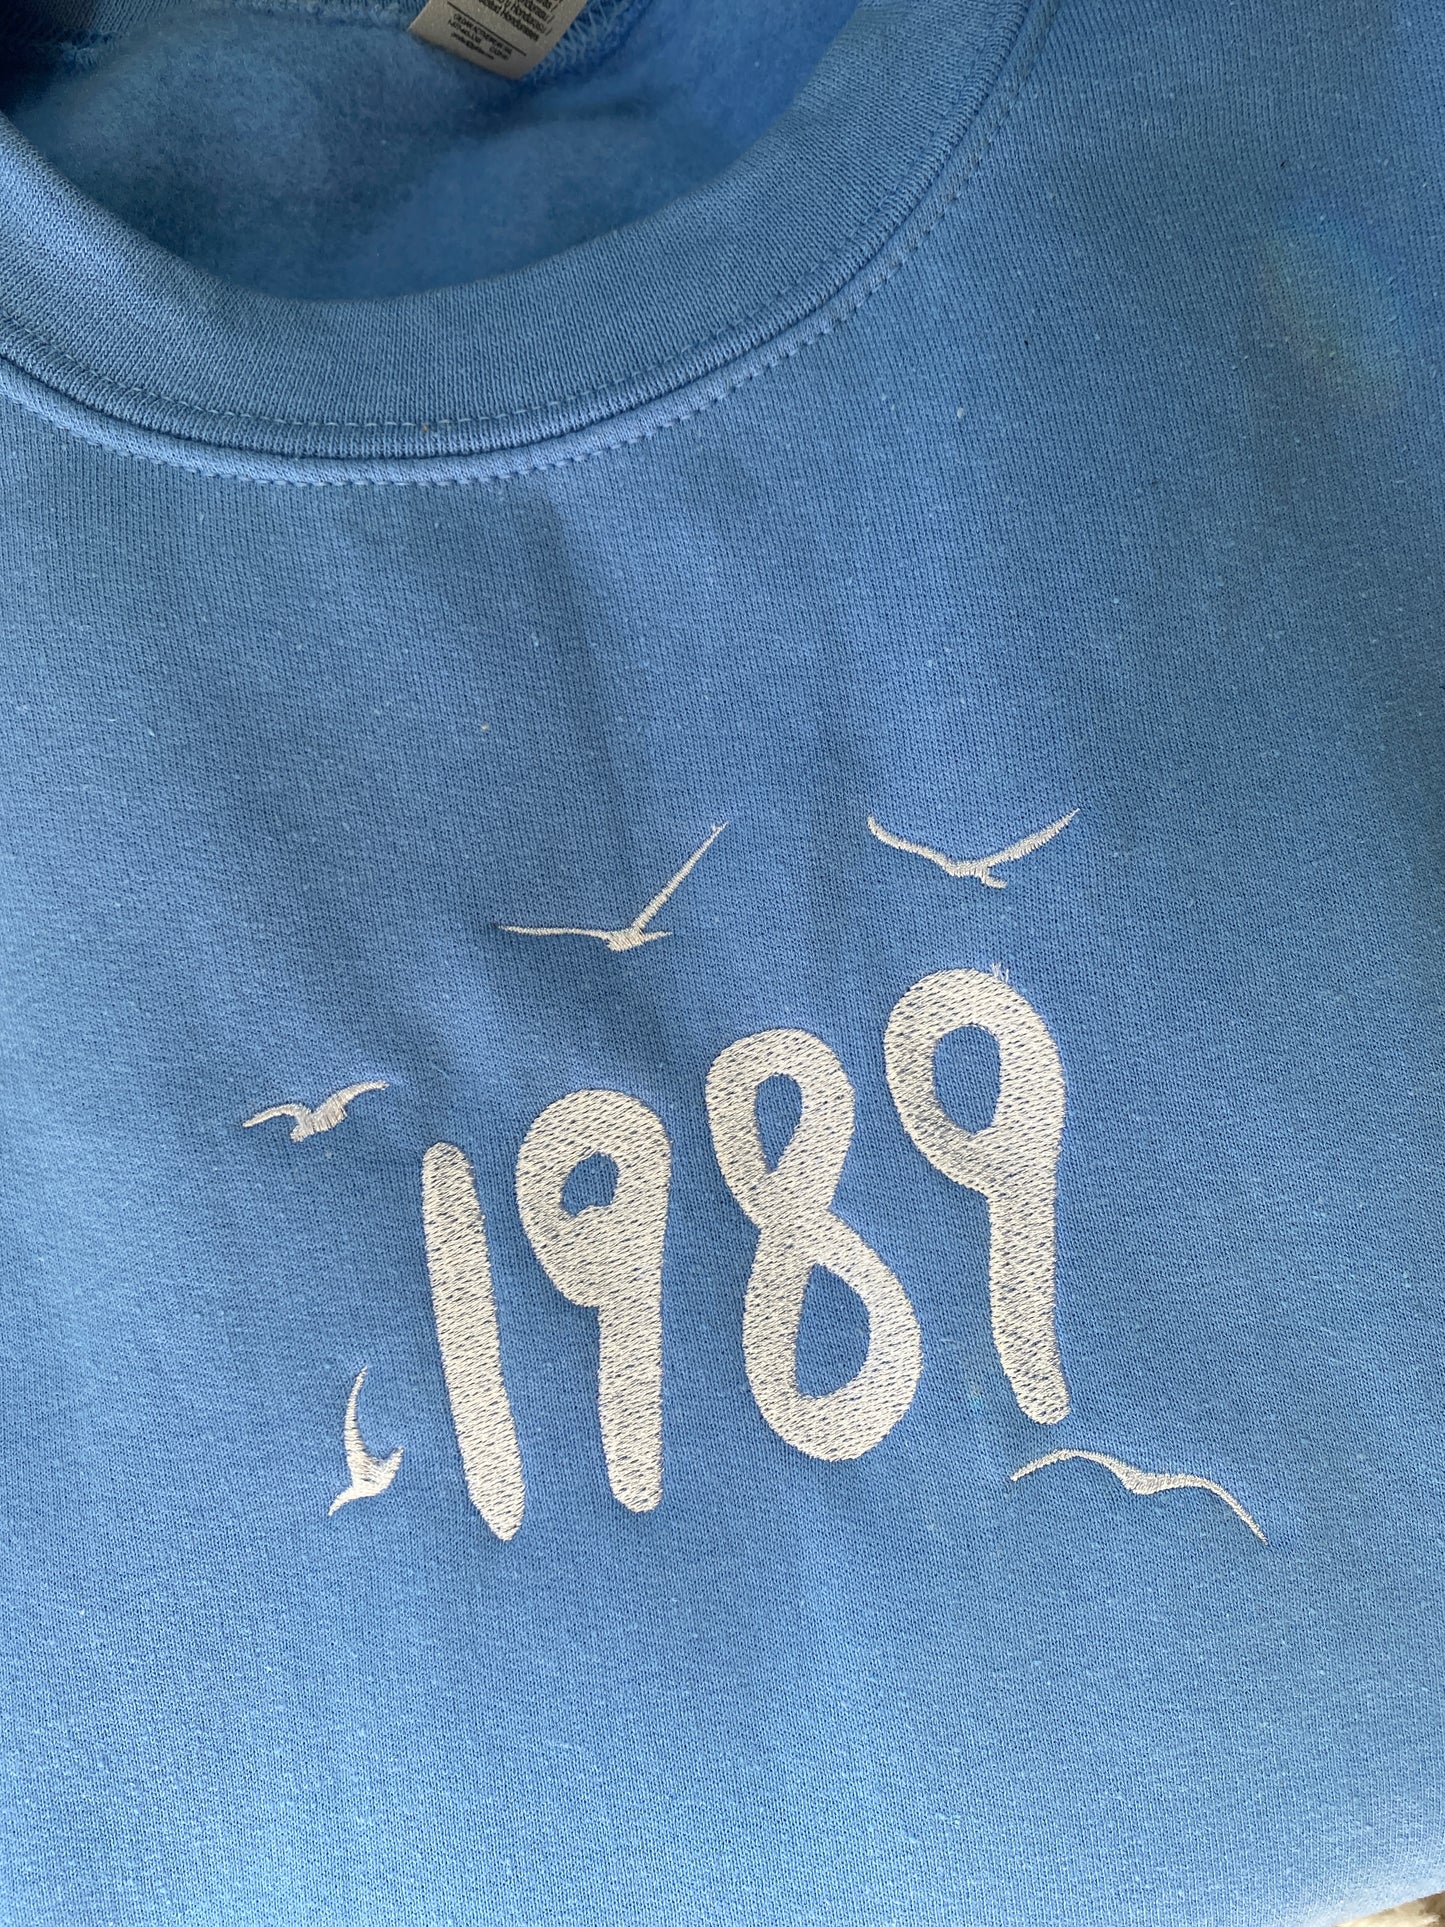 1989 Sweatshirt Large